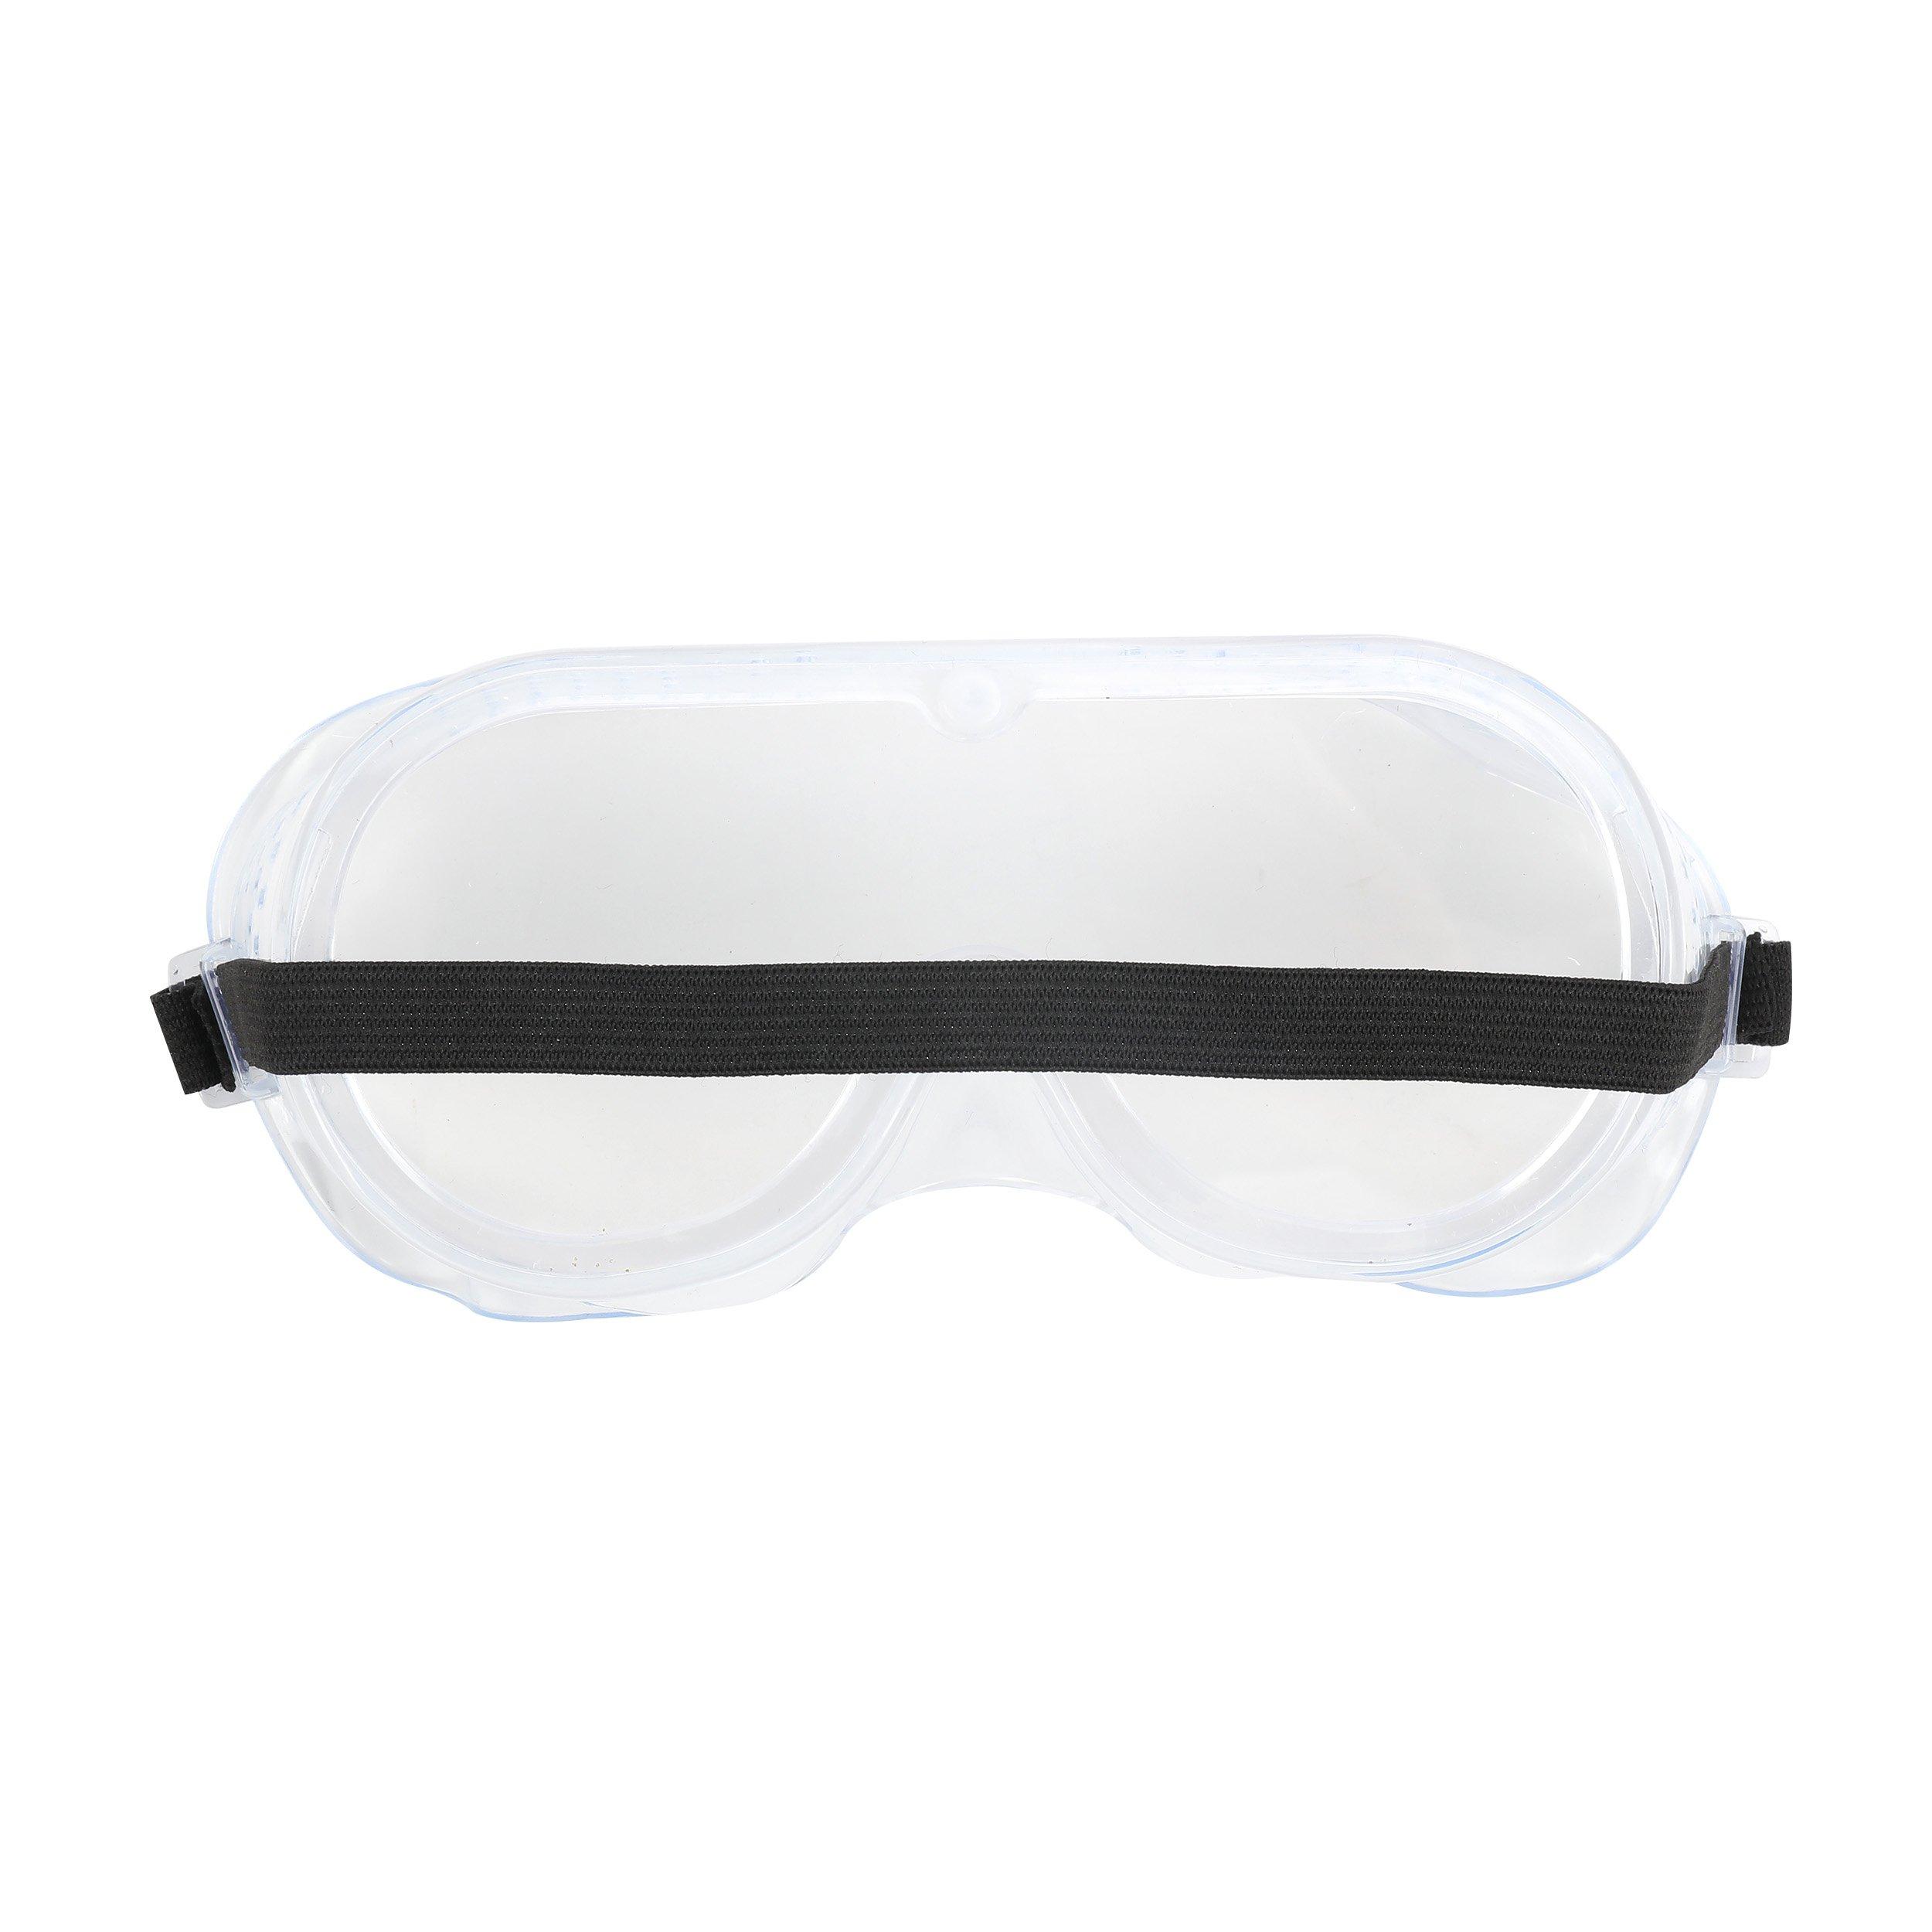 Goldblatt Protective Goggles